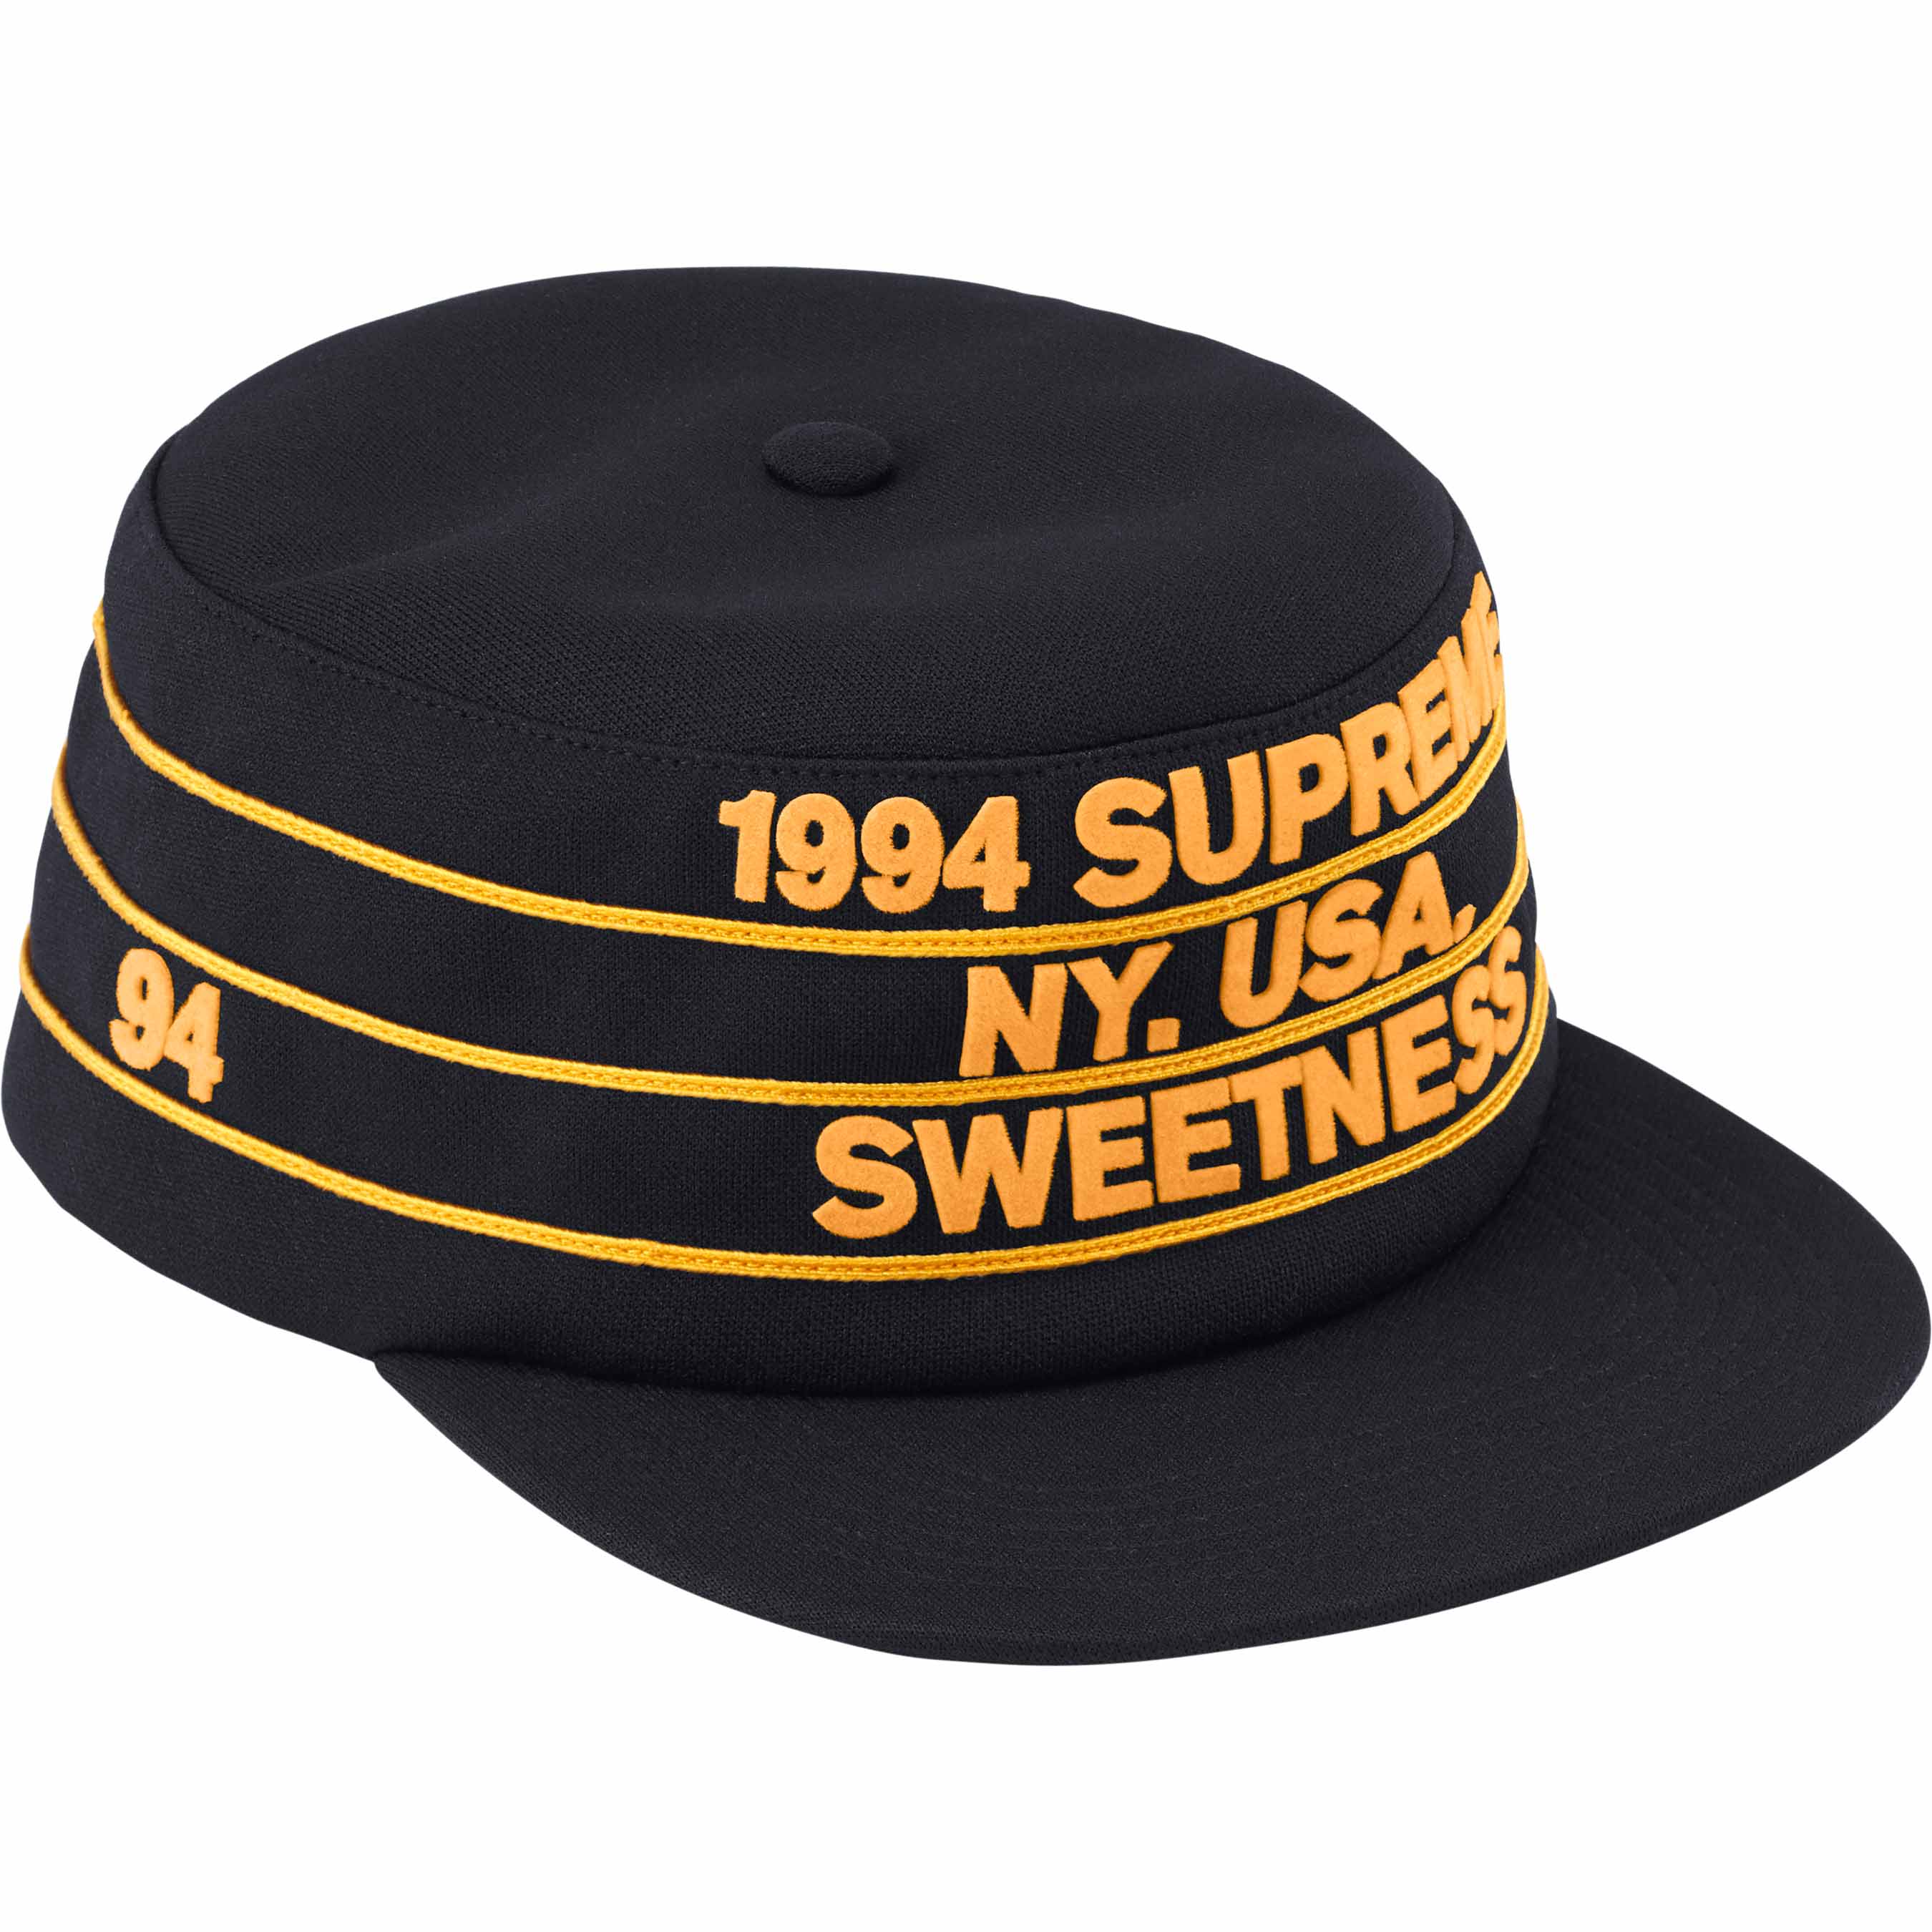 Pro Bowl Pillbox Hat - Shop - Supreme